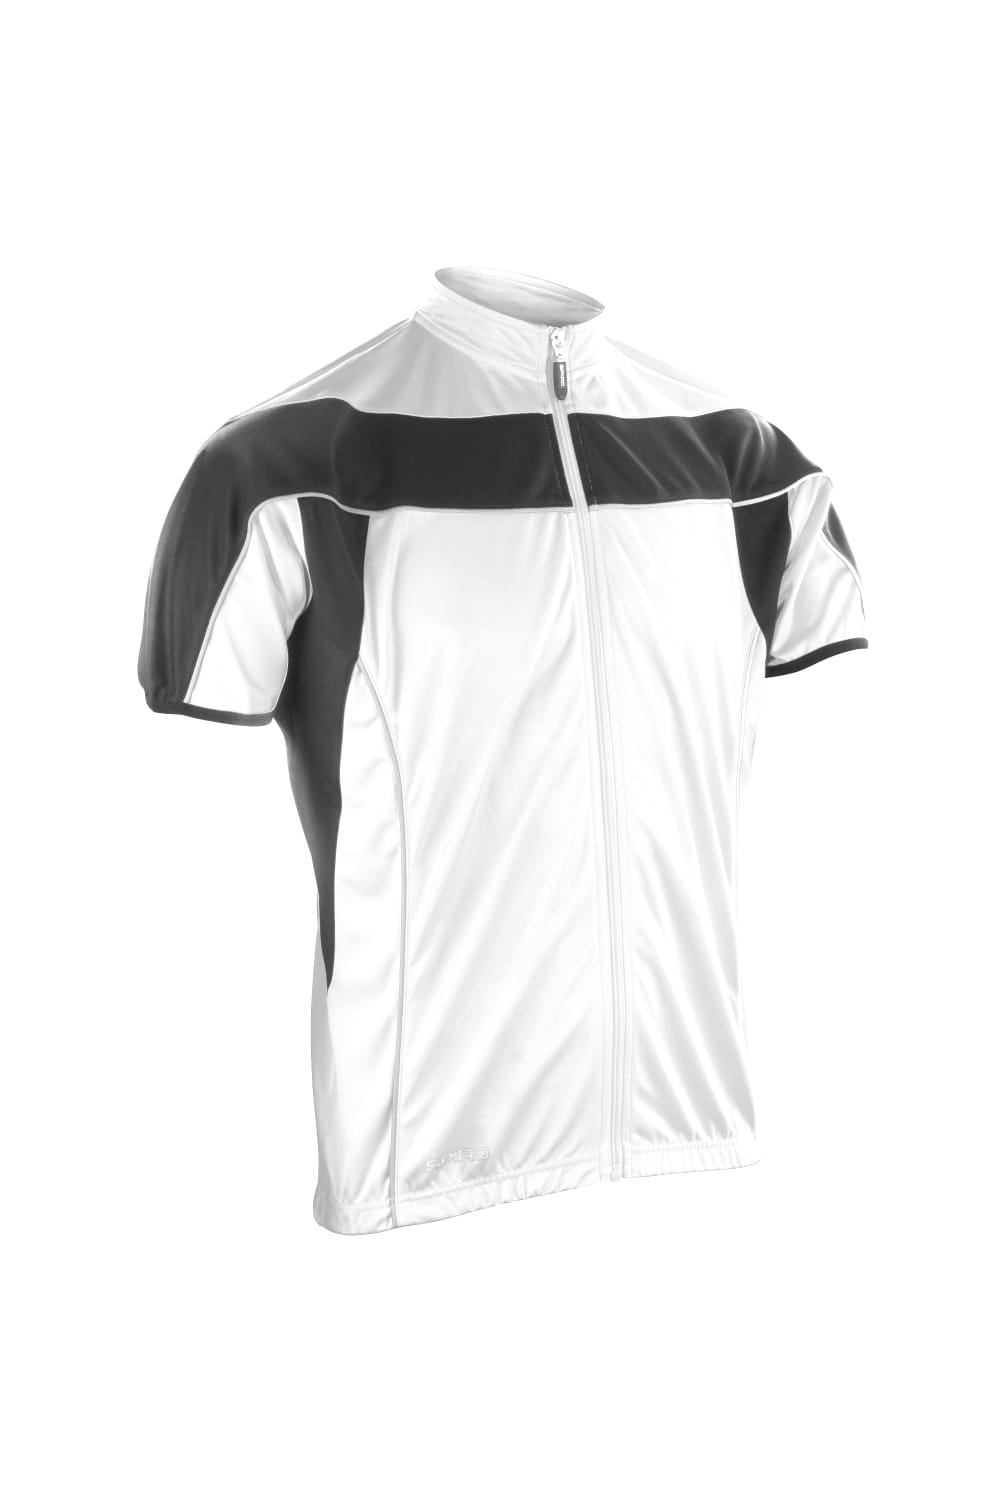 Spiro Mens Bikewear/Cycling 1/4 Zip Cool-Dry Performance Fleece Top/Light Jacket (White / Black)